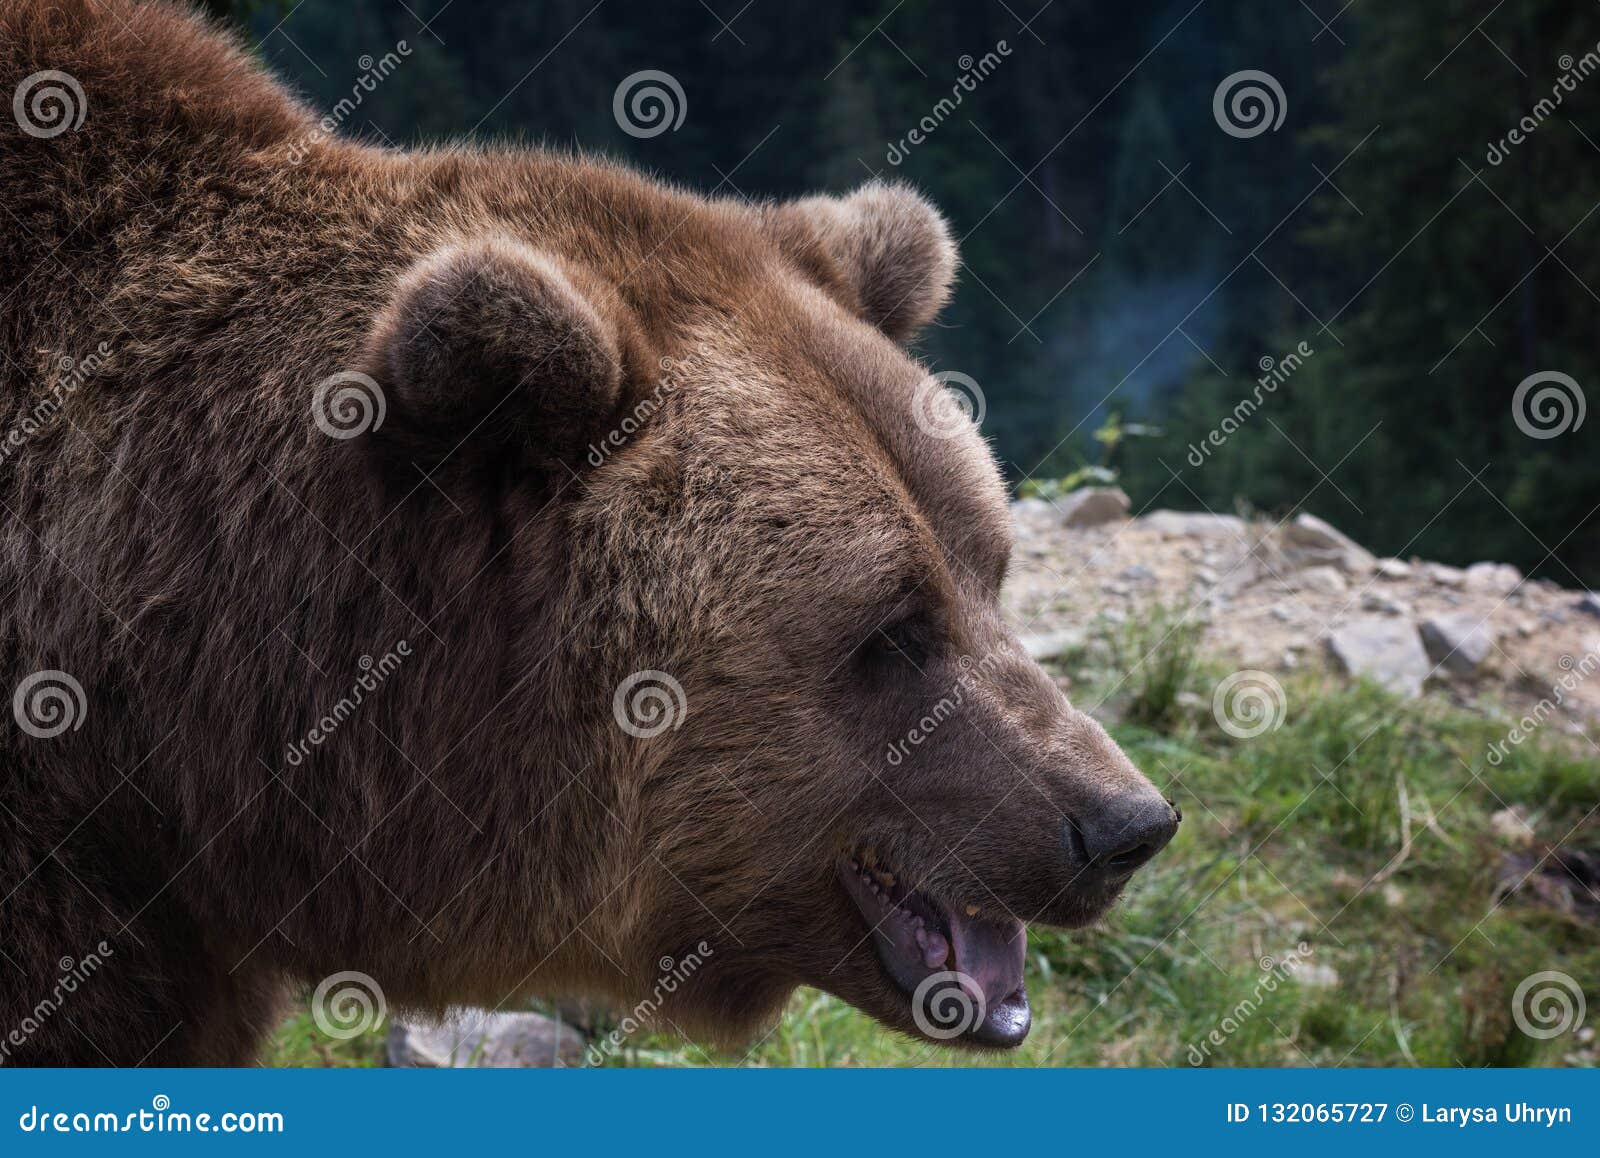 big european brown bear ursidae, ursus arctos with expressive sad eyes on the forest background